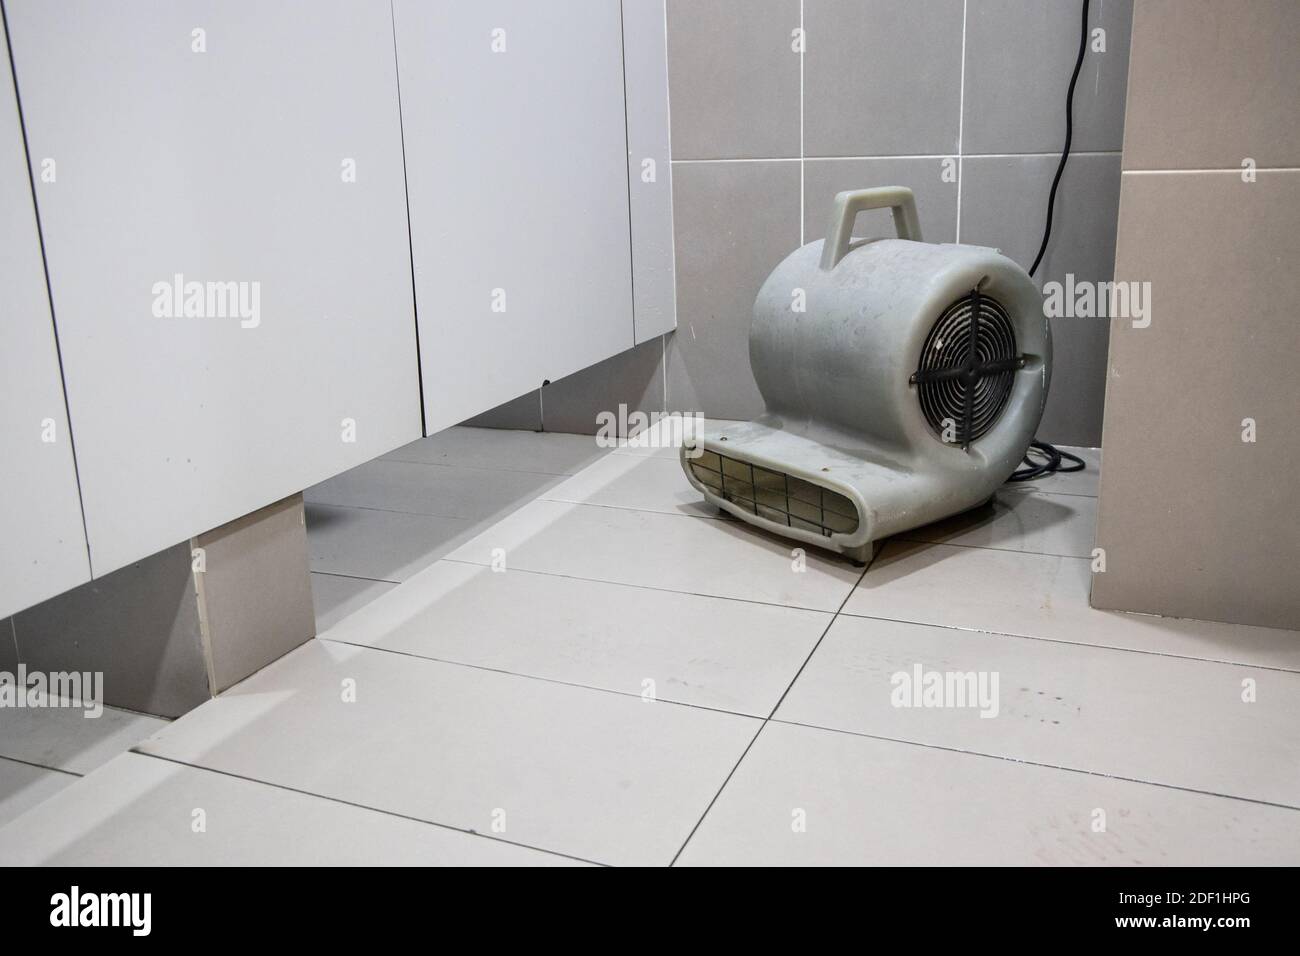 Boden Trockner Gebläse Ventilator Maschine im Bad trocknen nassen